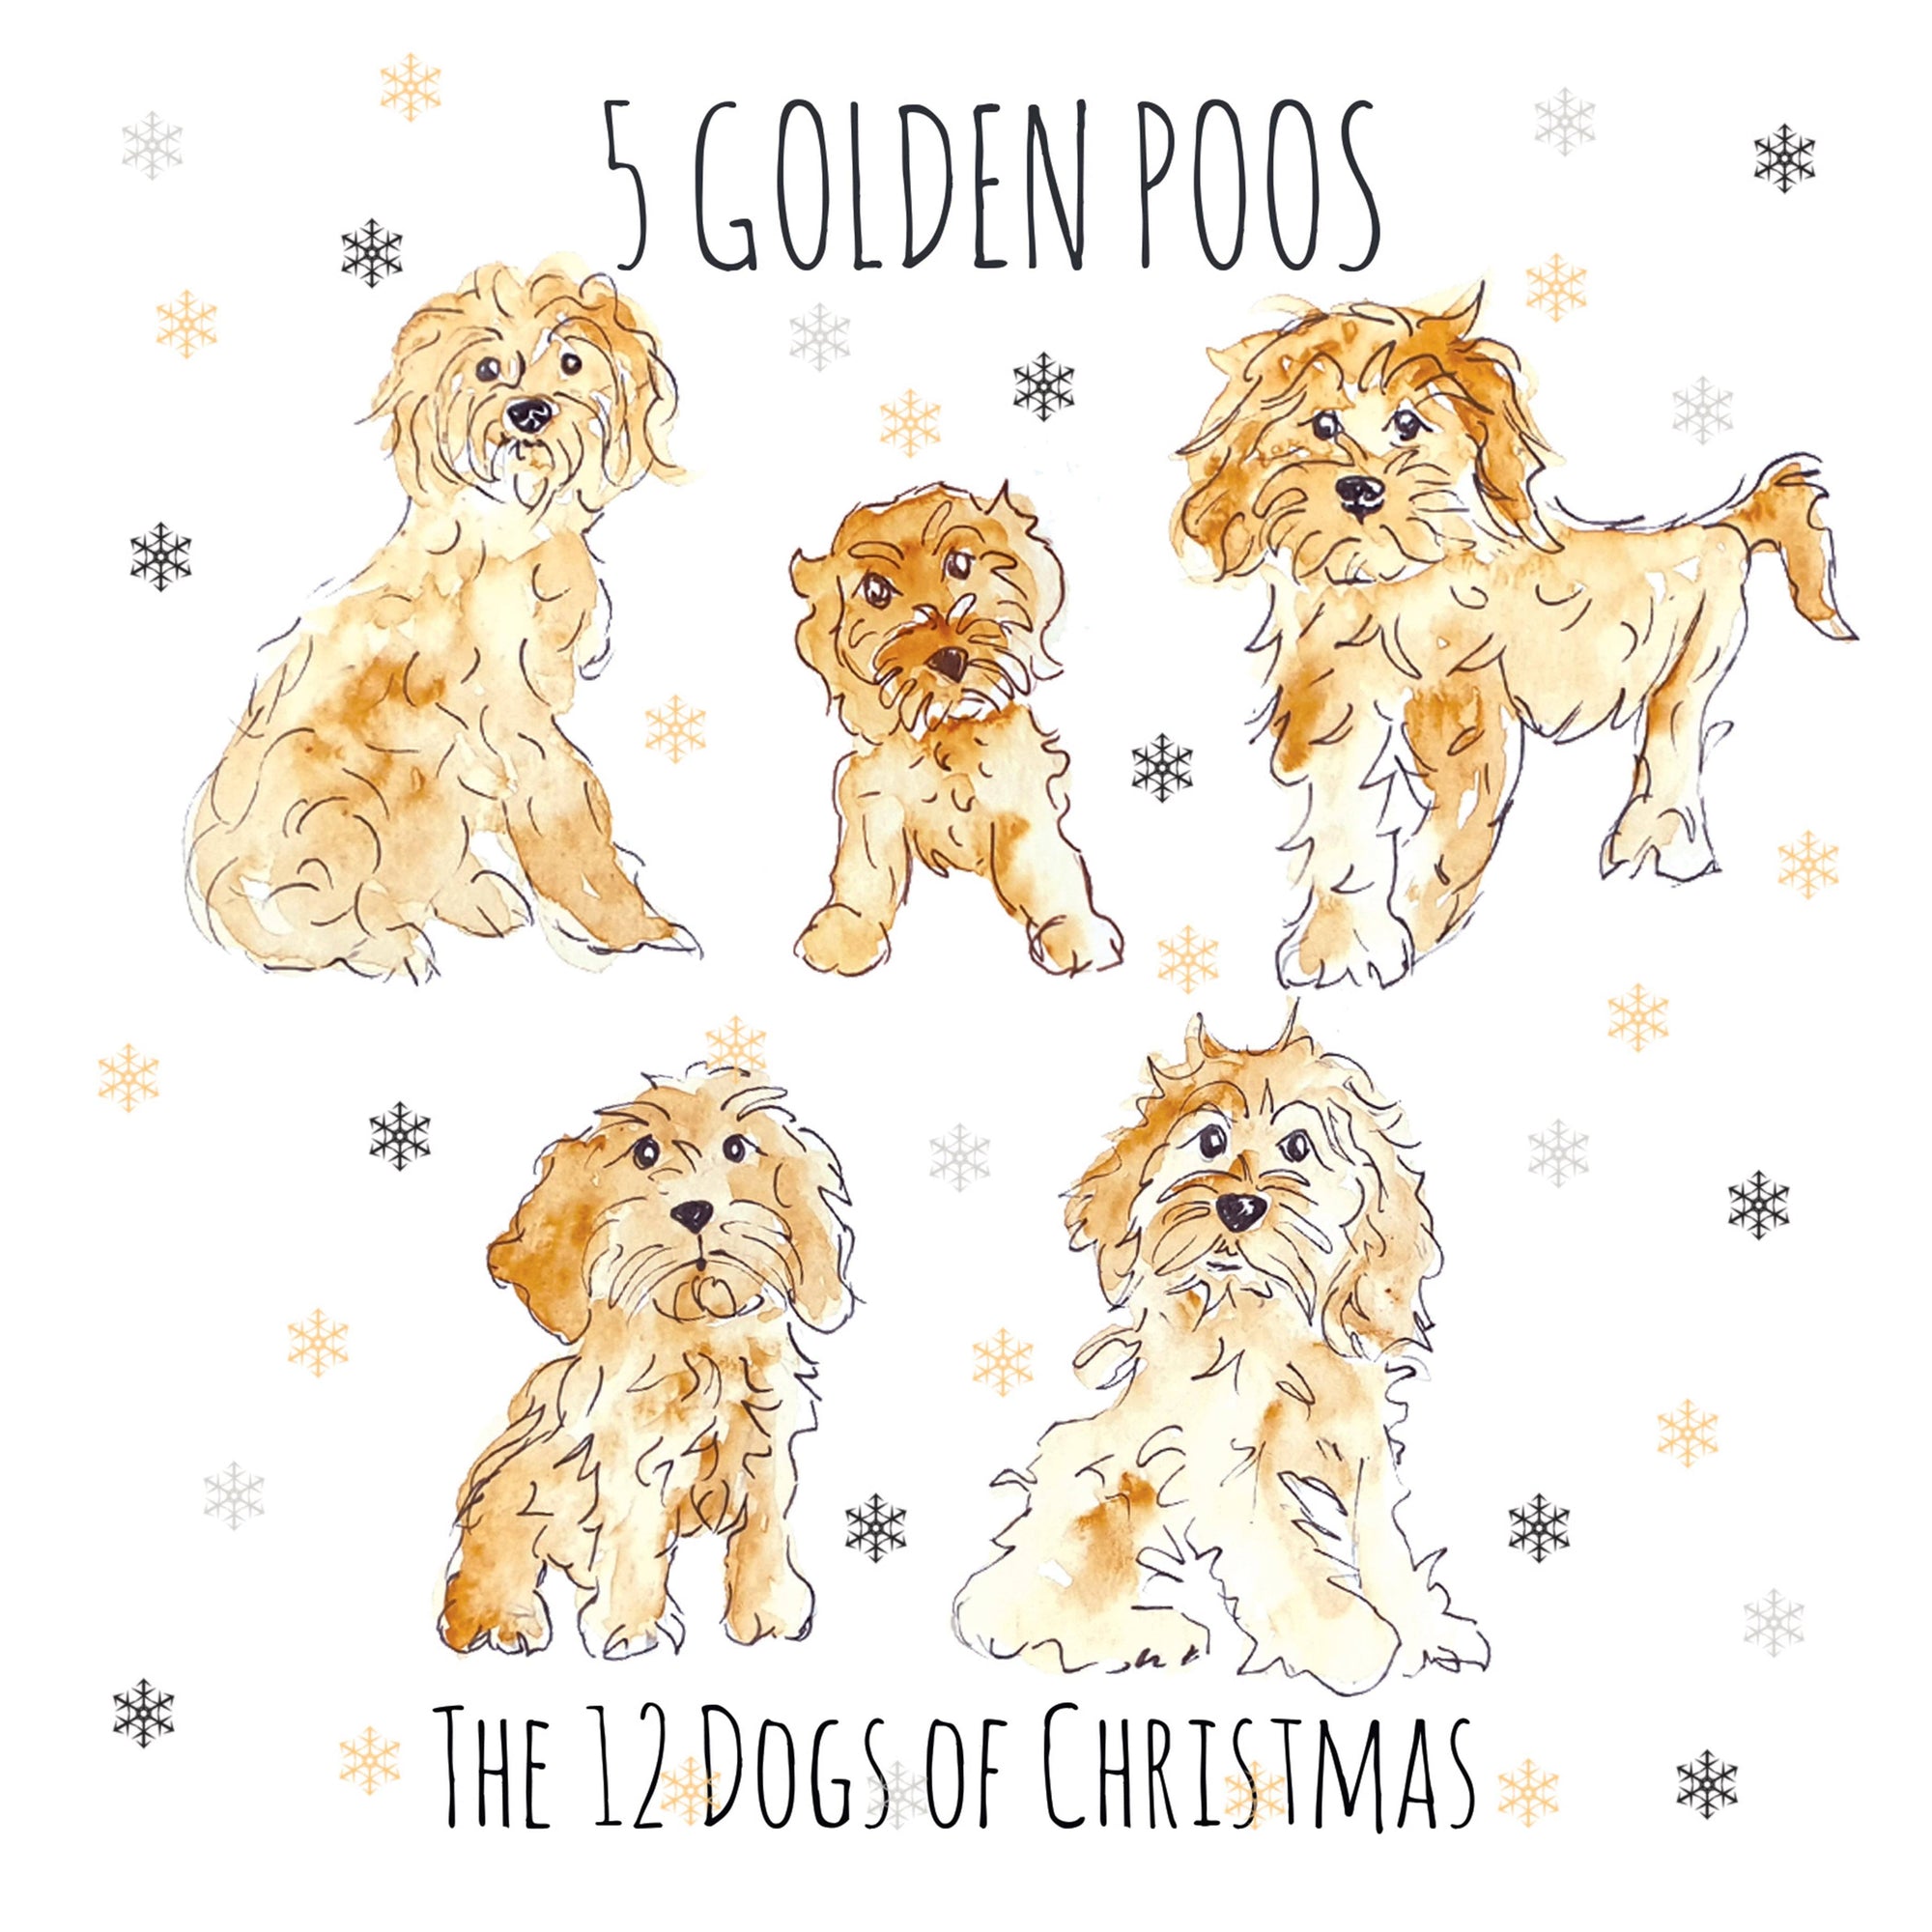 5 Golden Poo's Christmas Card